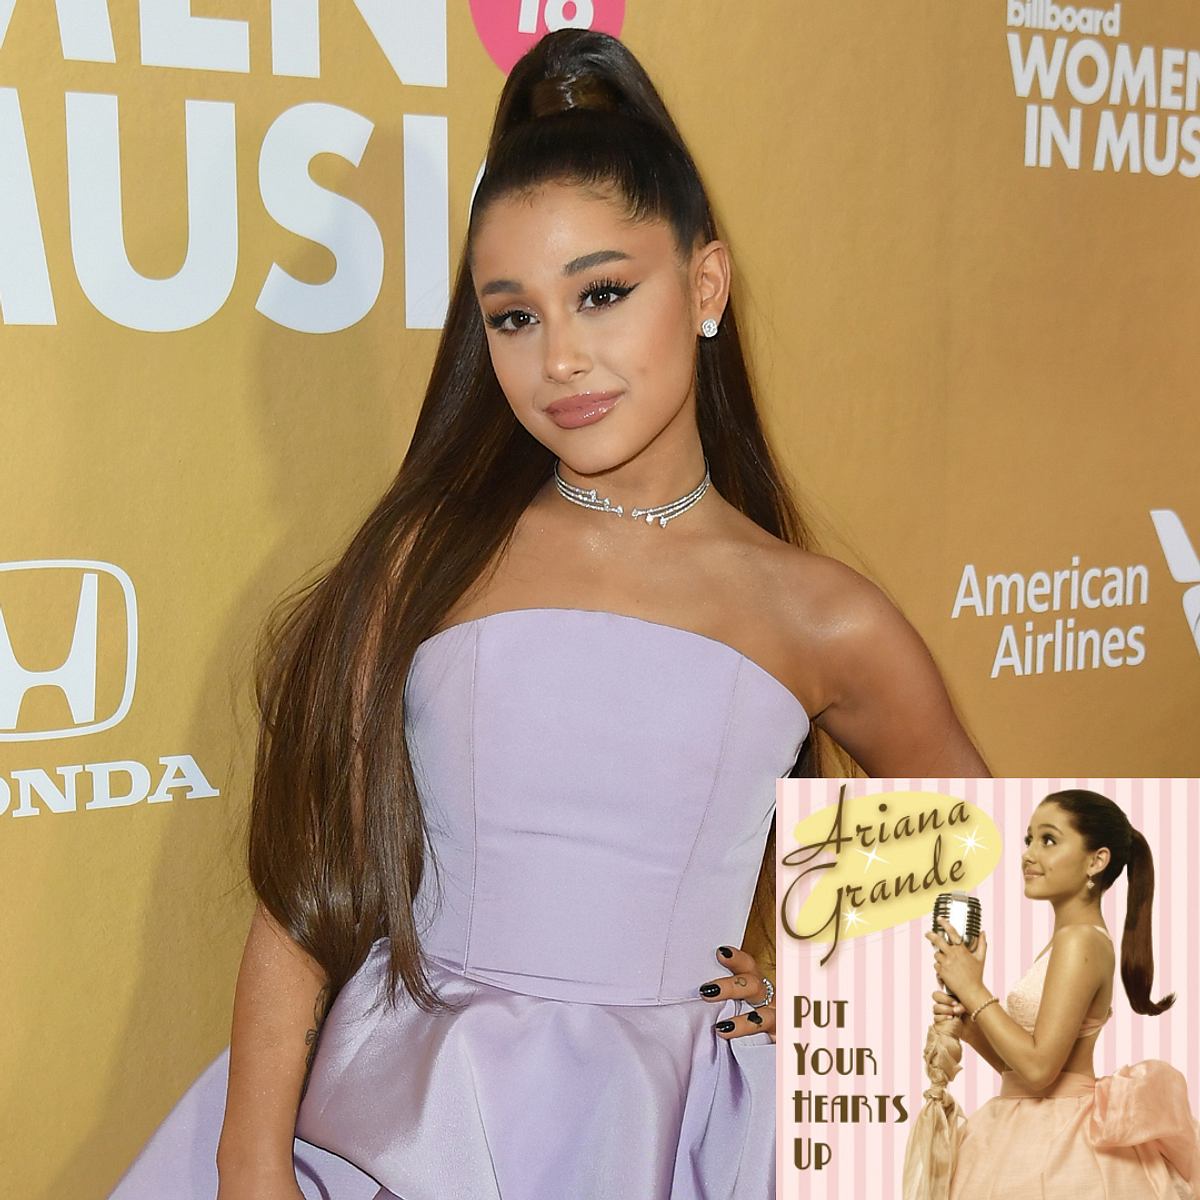 Stars, die ihre Songs hassen: Ariana Grande – Put Your Hearts Up